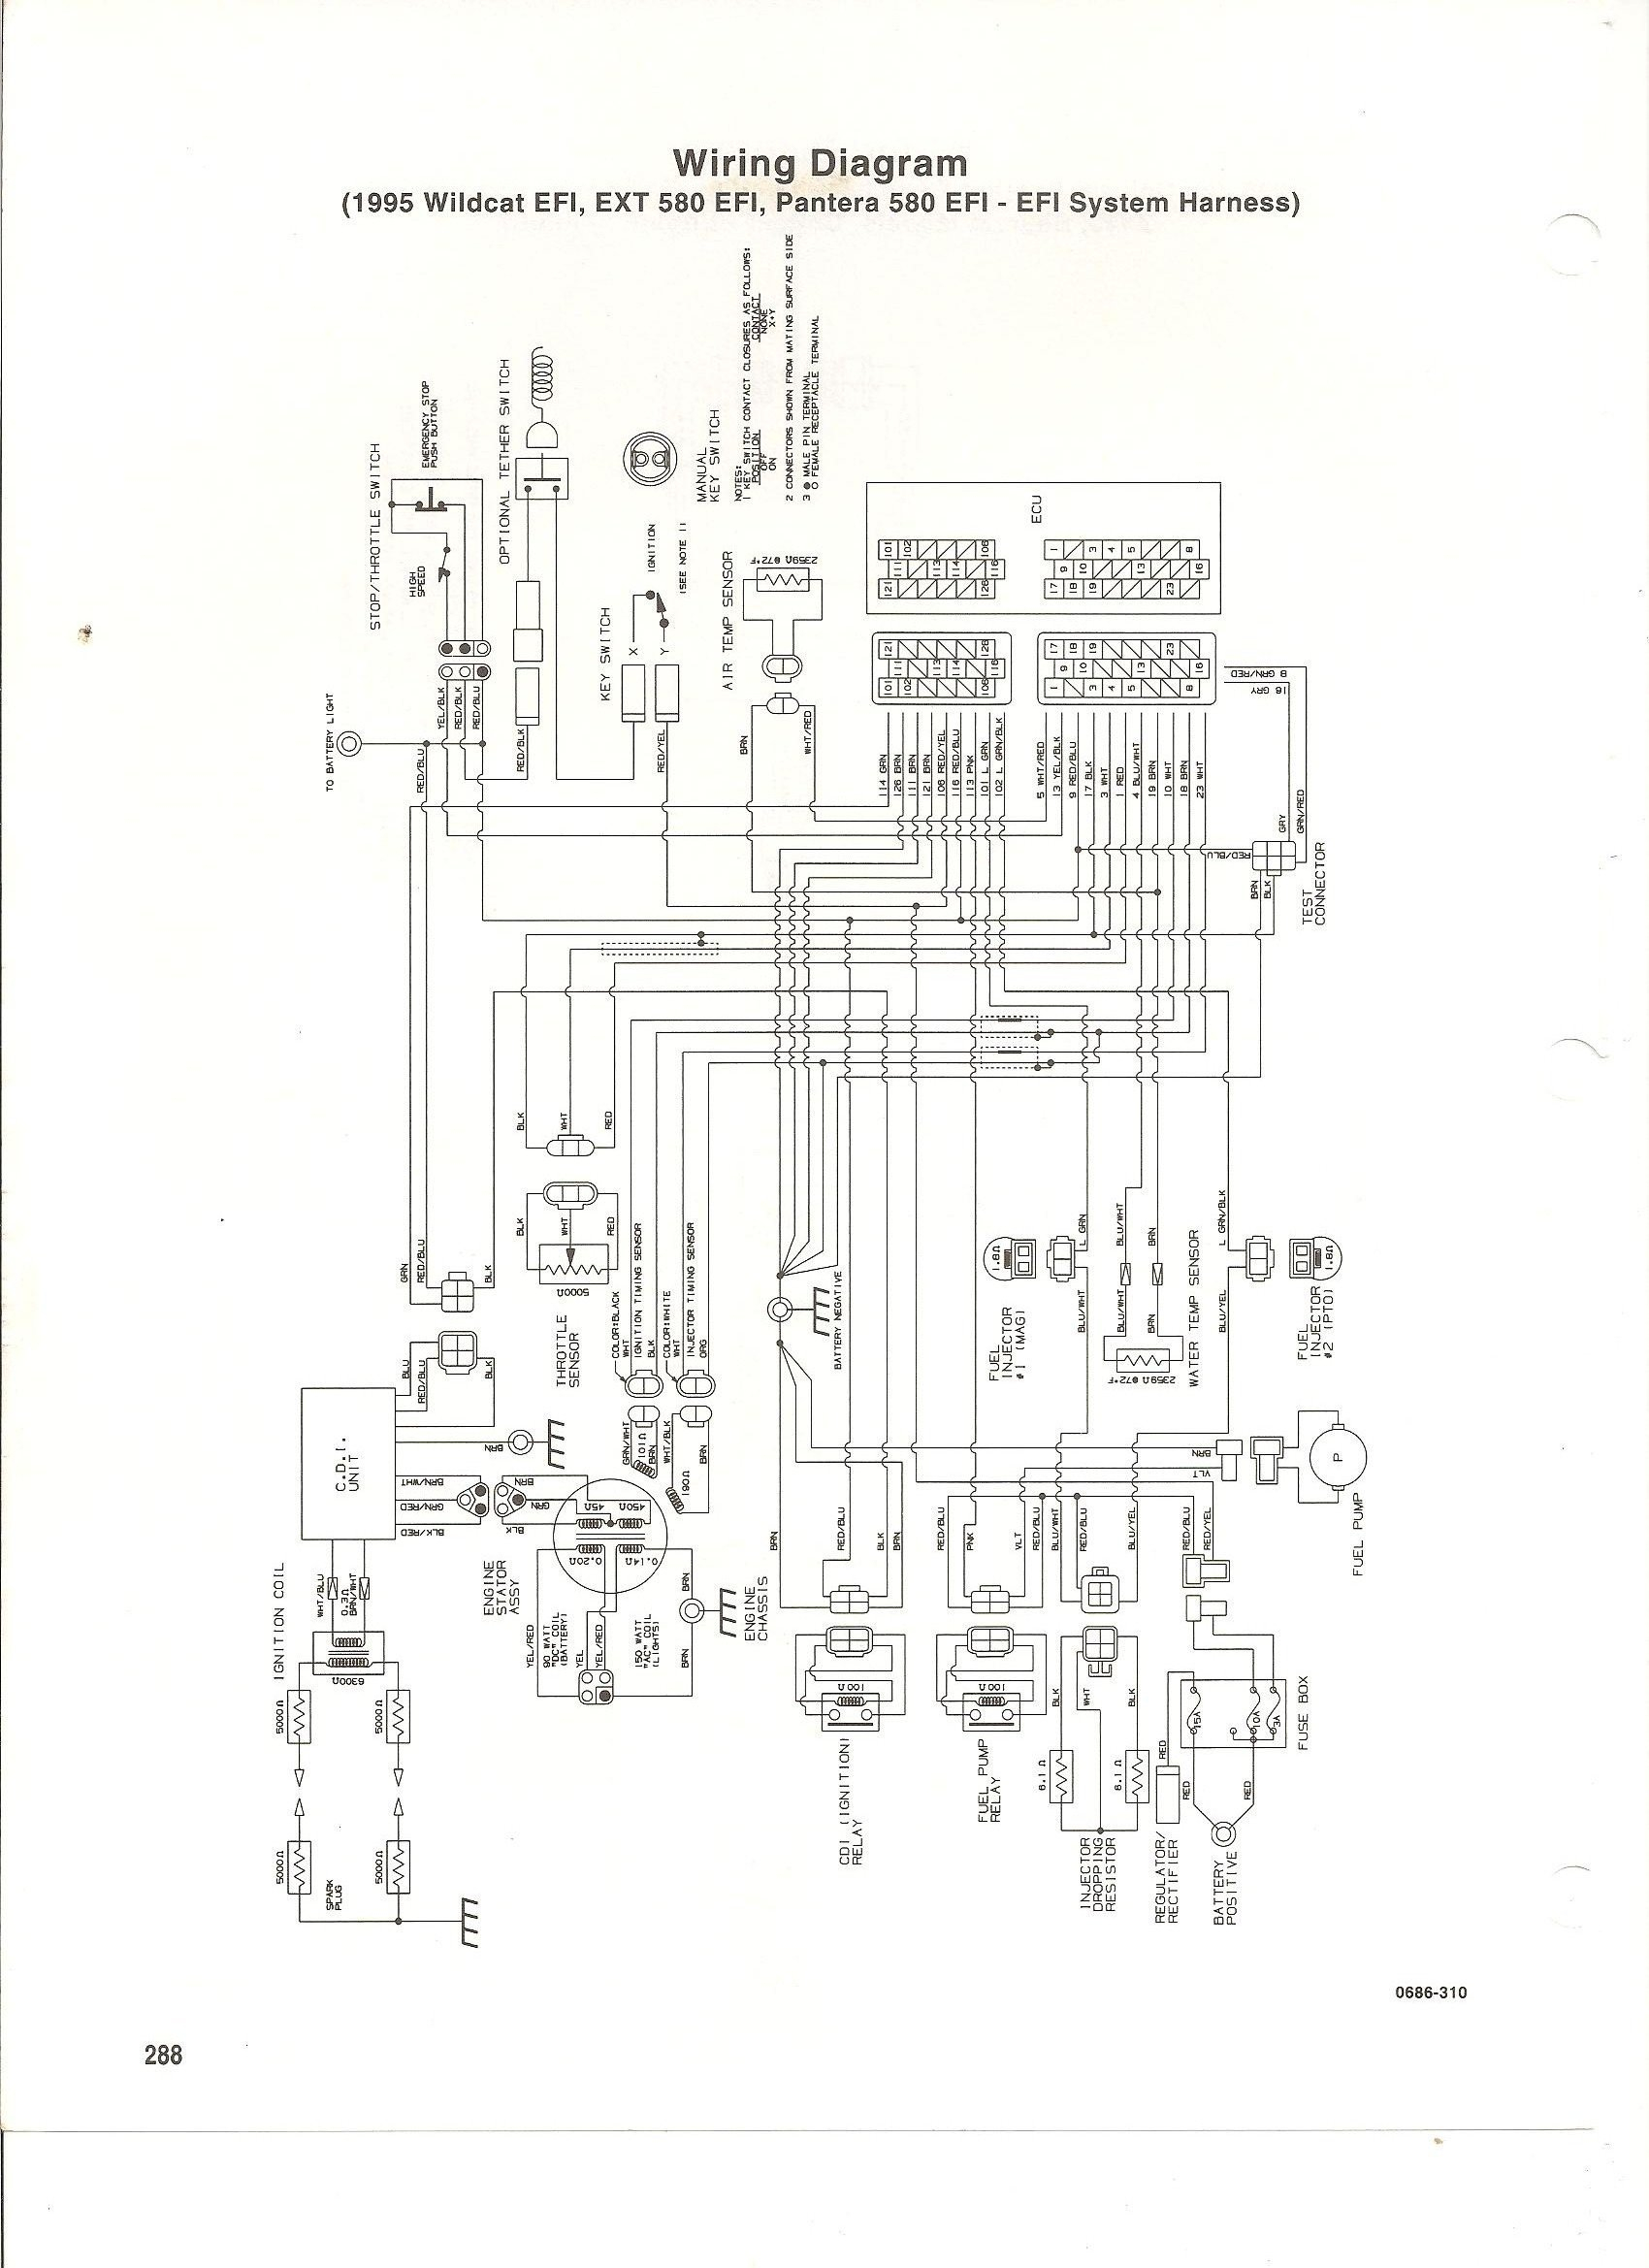 Wiring Diagram For 1993artic Cat 580